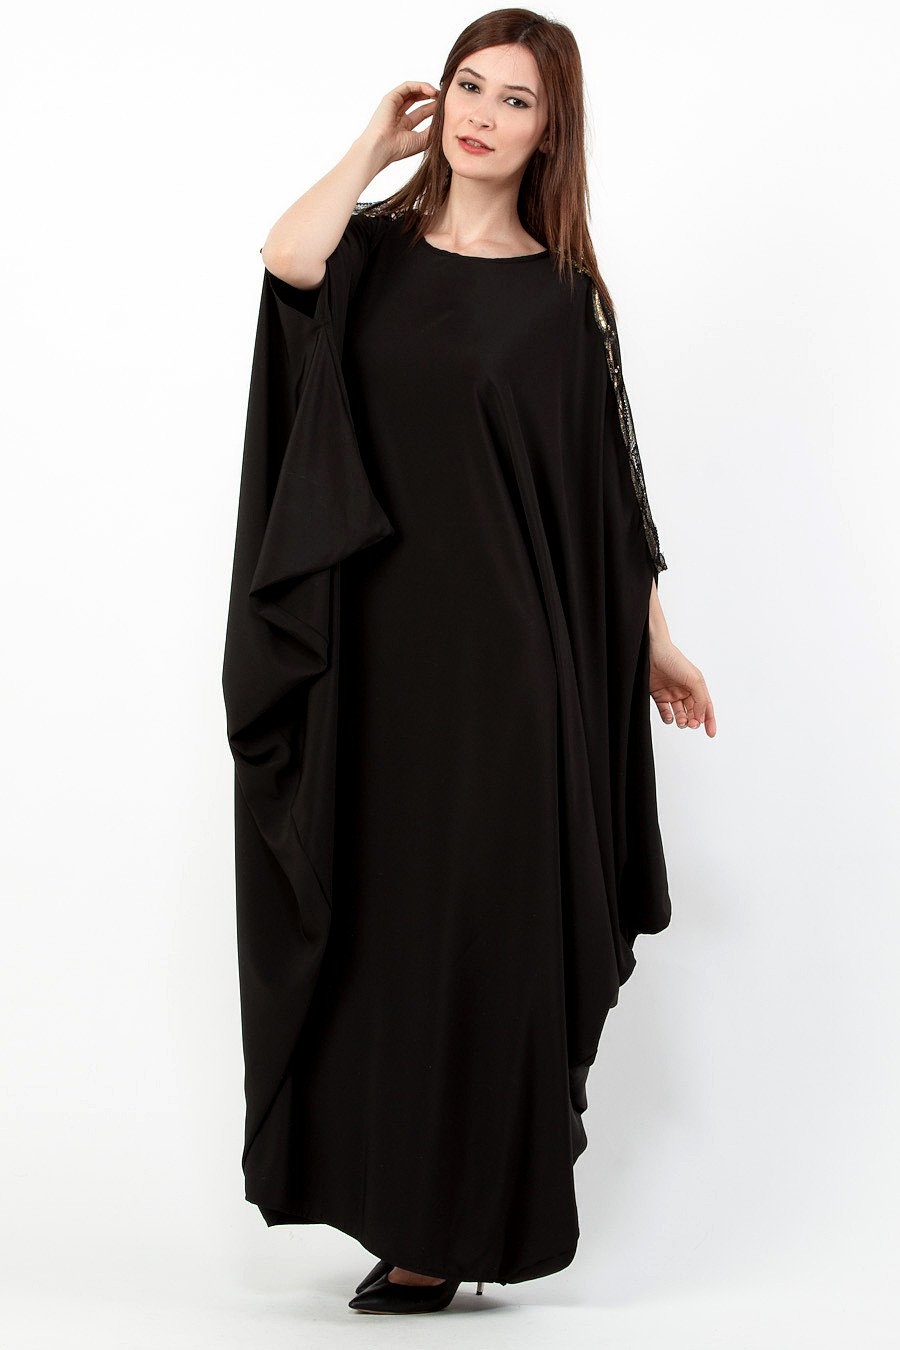 Abaya Designs 2013-14 | Adorable Abaya from Saudia